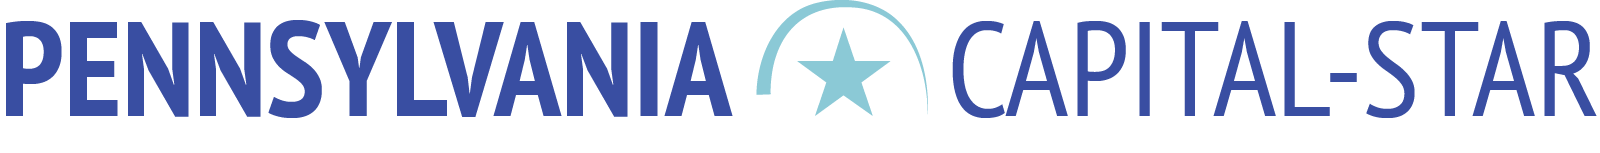 Pennsylvania Capital-Star logo